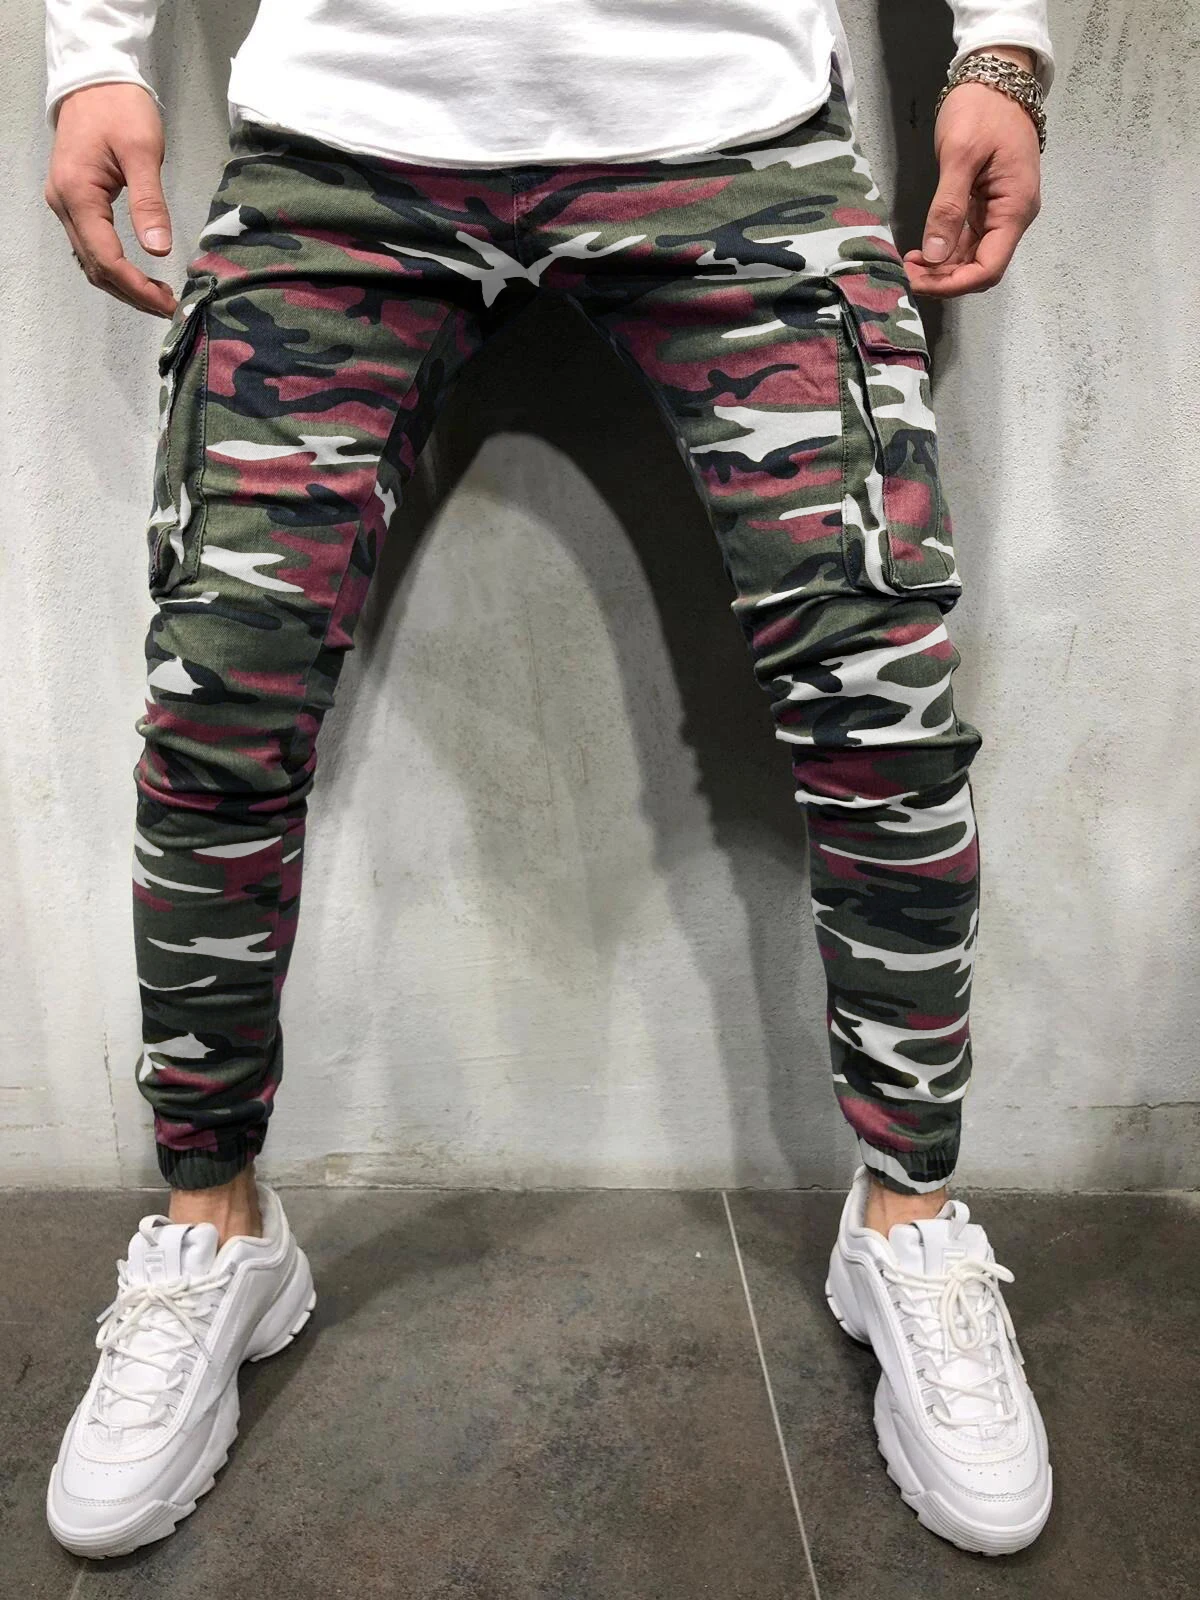 2021 Hot Sale Fashion Men Camouflage Skinny Jeans Stretchy Jeans Denim ...